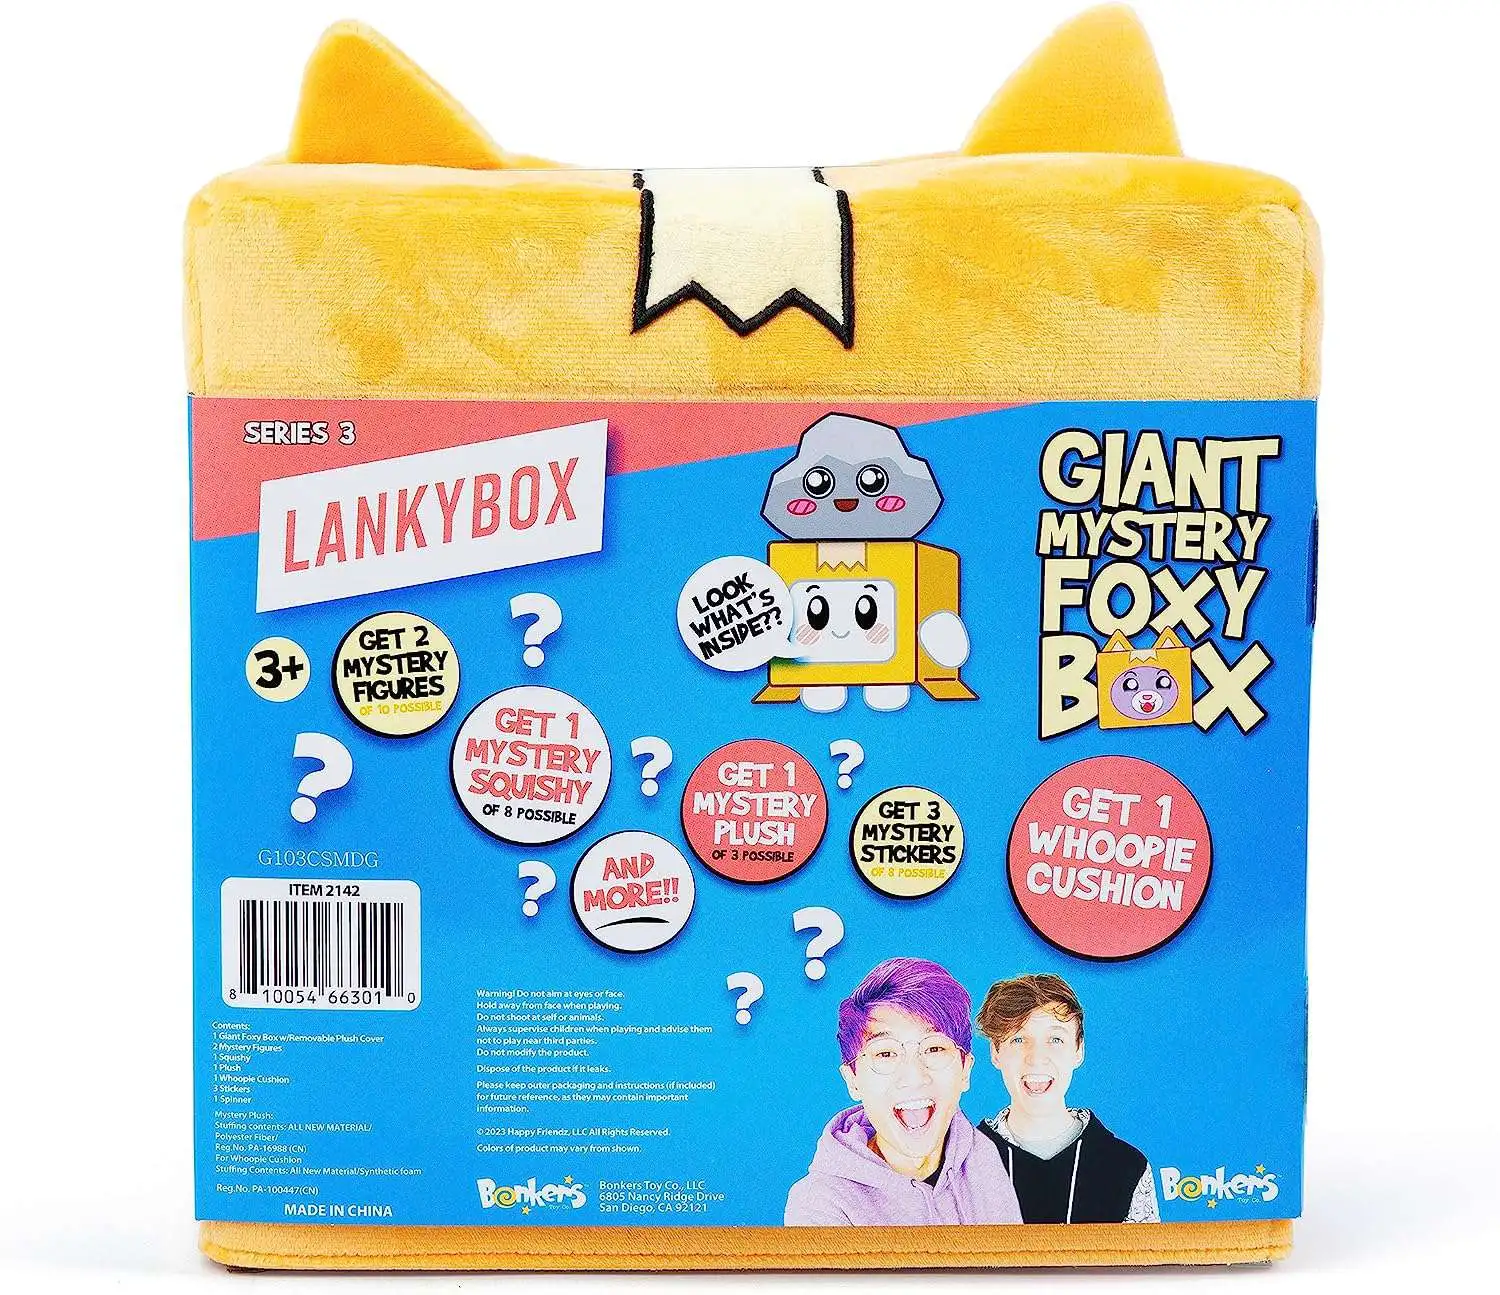  LankyBox Giant Mystery Box: Wearable Boxy case, 2